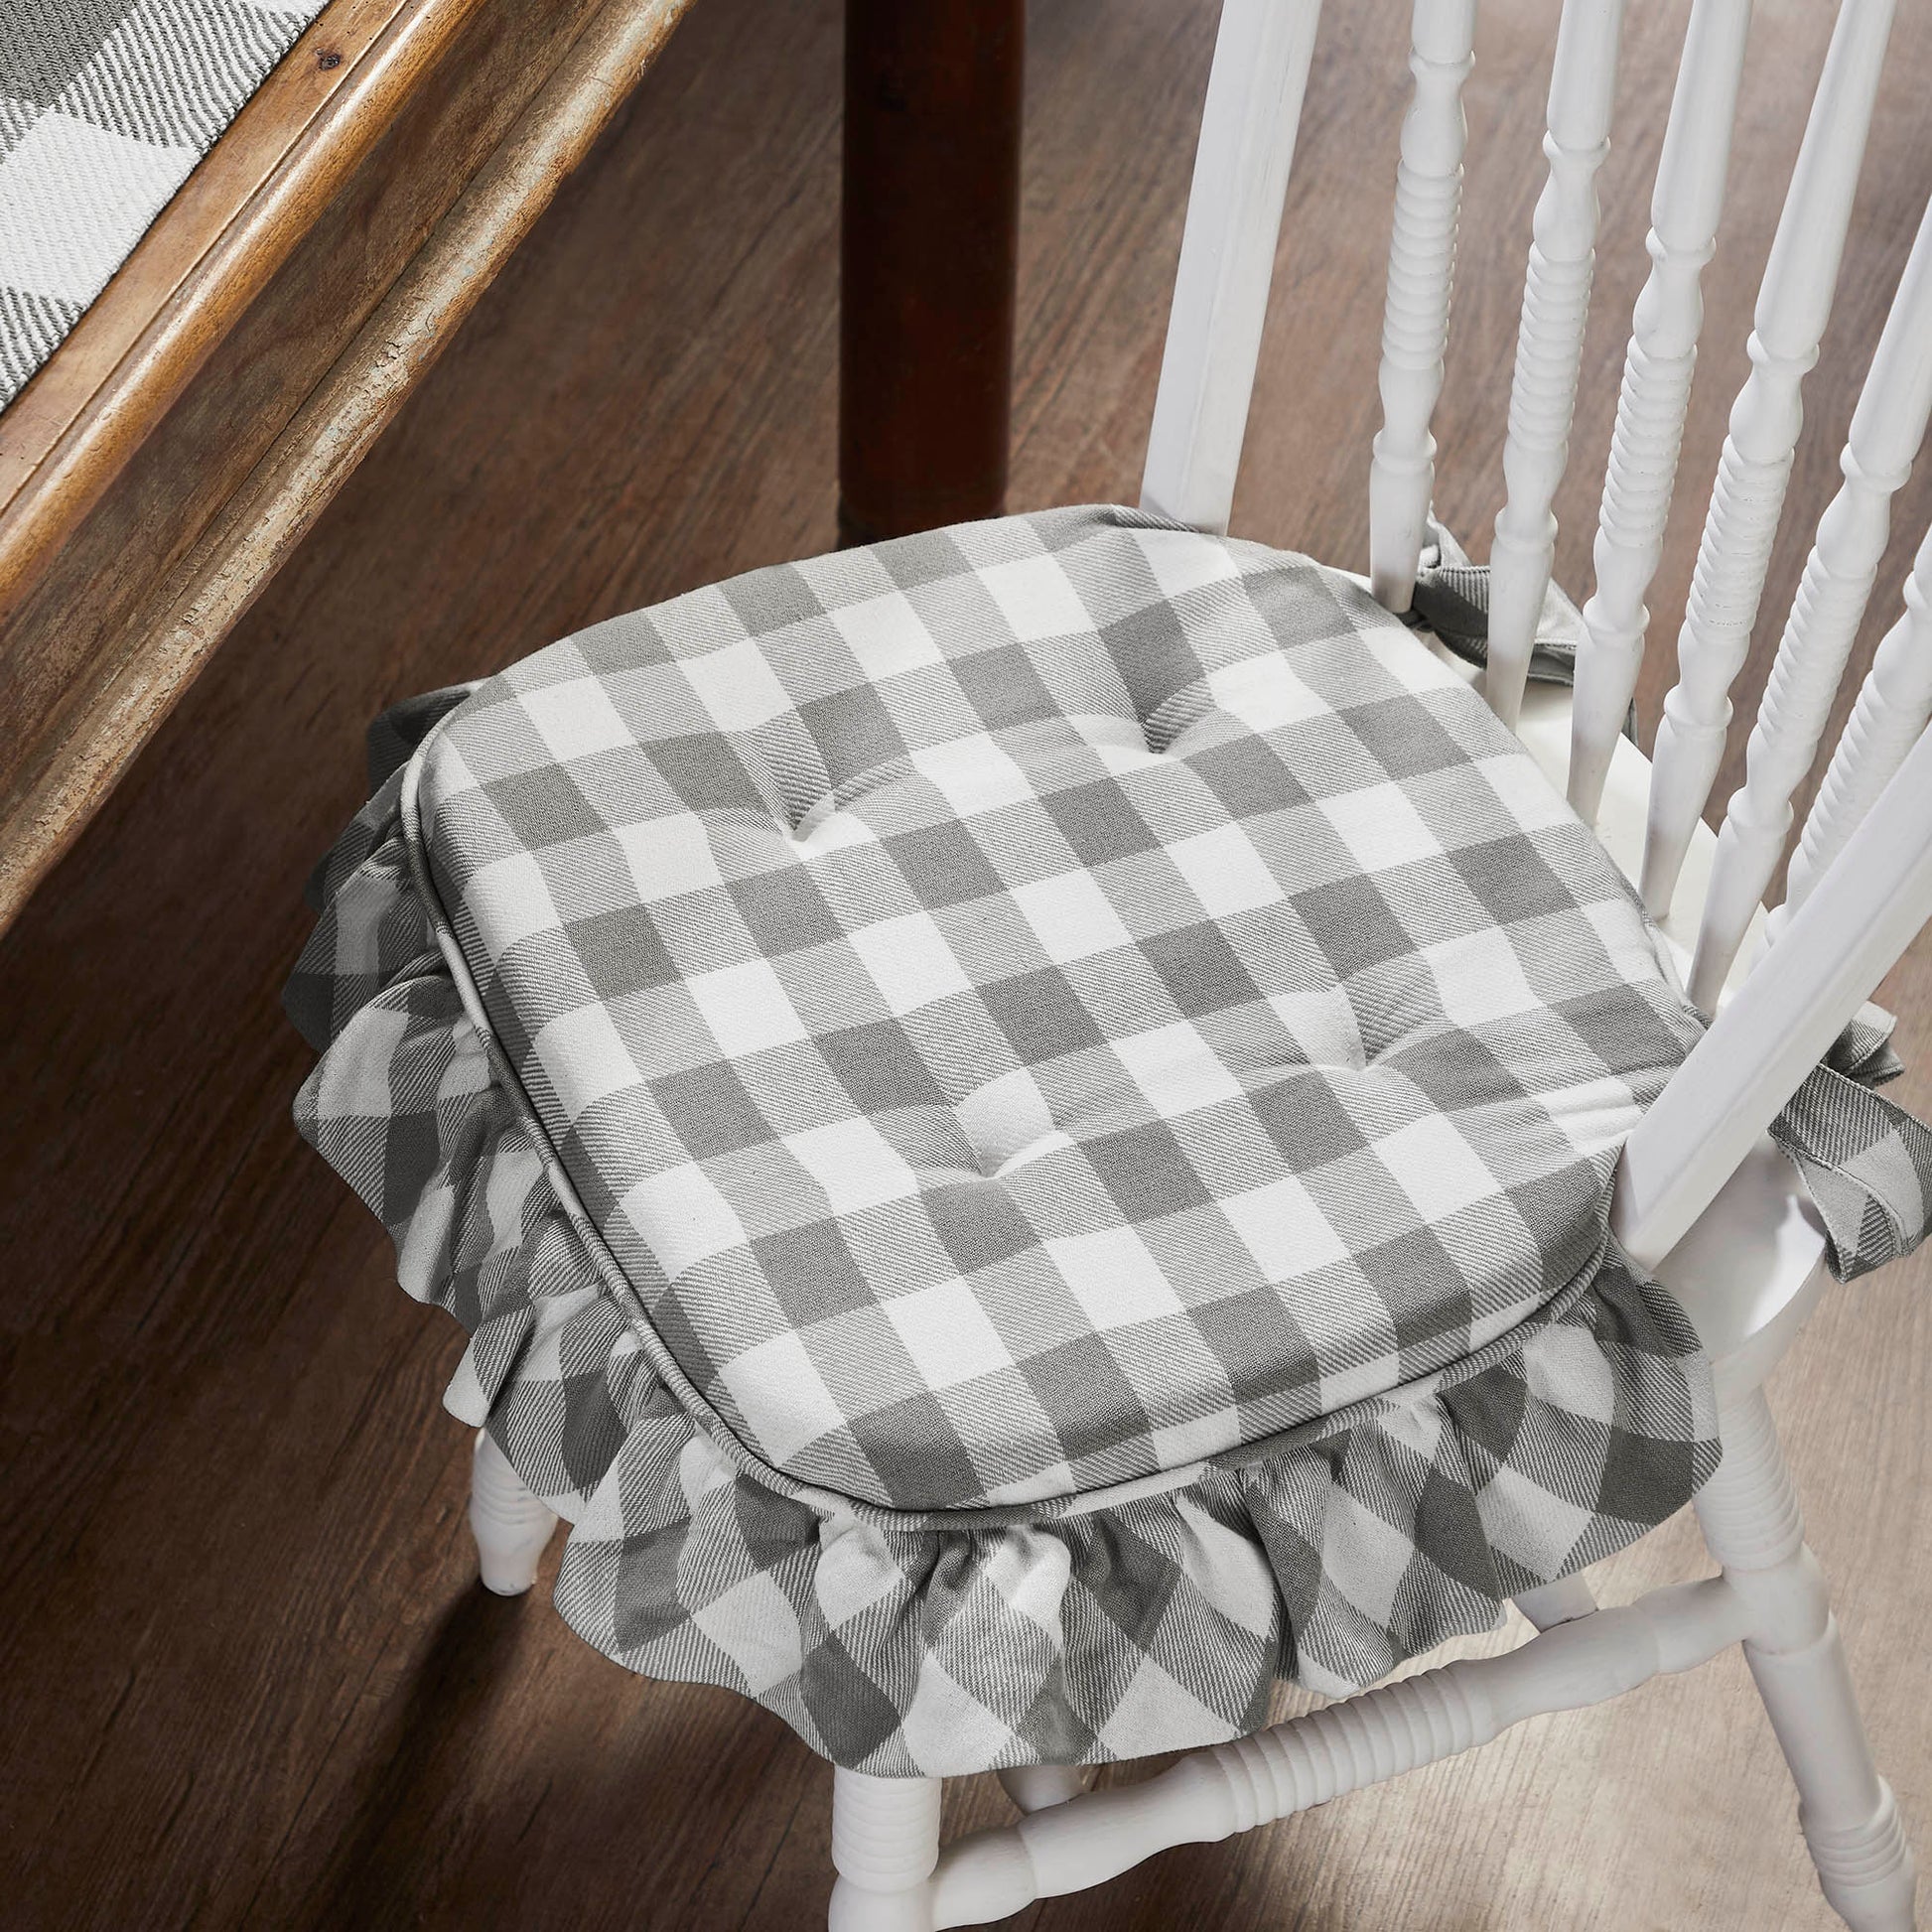 Annie Buffalo Check Grey Ruffled Chair Pad 16.5x18 SpadezStore